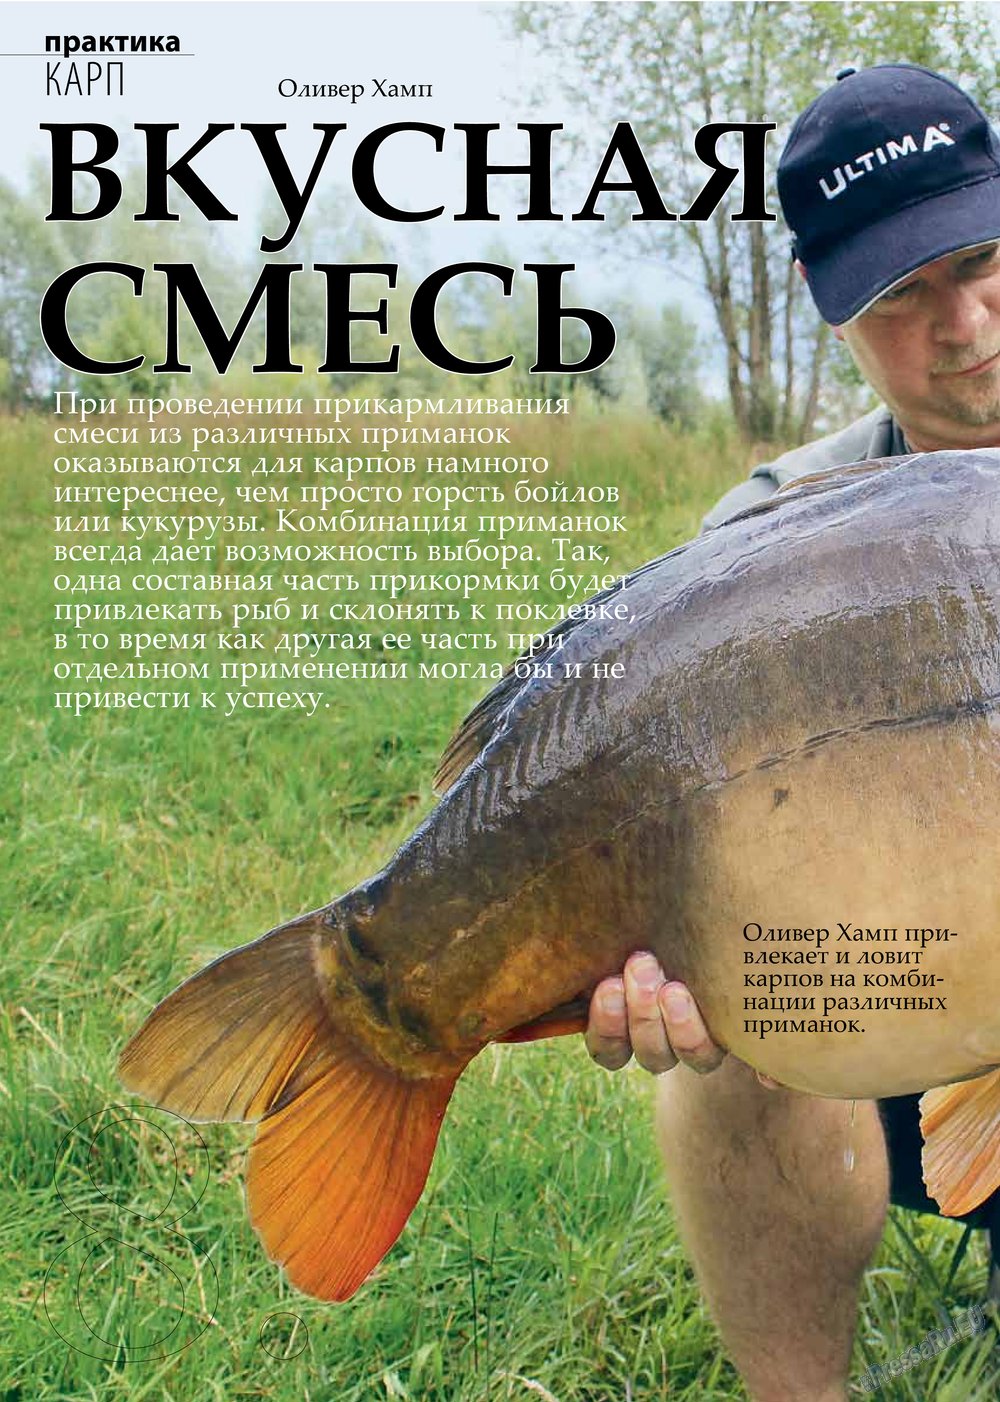 Рыбалка Plus (журнал). 2013 год, номер 2, стр. 8